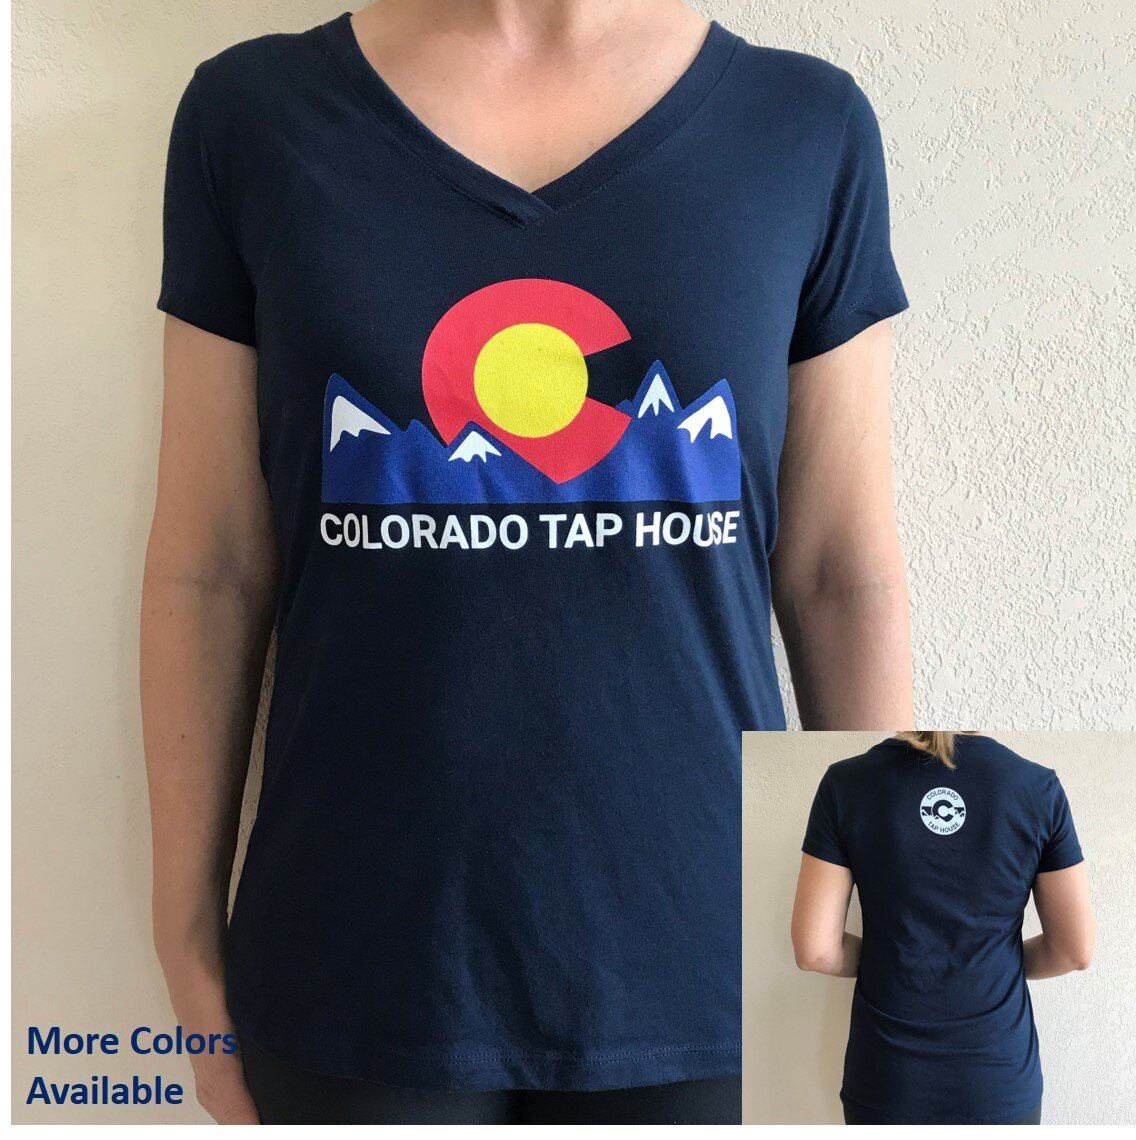 V Neck 'Colorado' Graphic Print Side Split Detail Oversized T-Shirt Dress in Charcoal Acid Wash, Women's Size US 6 - Ego